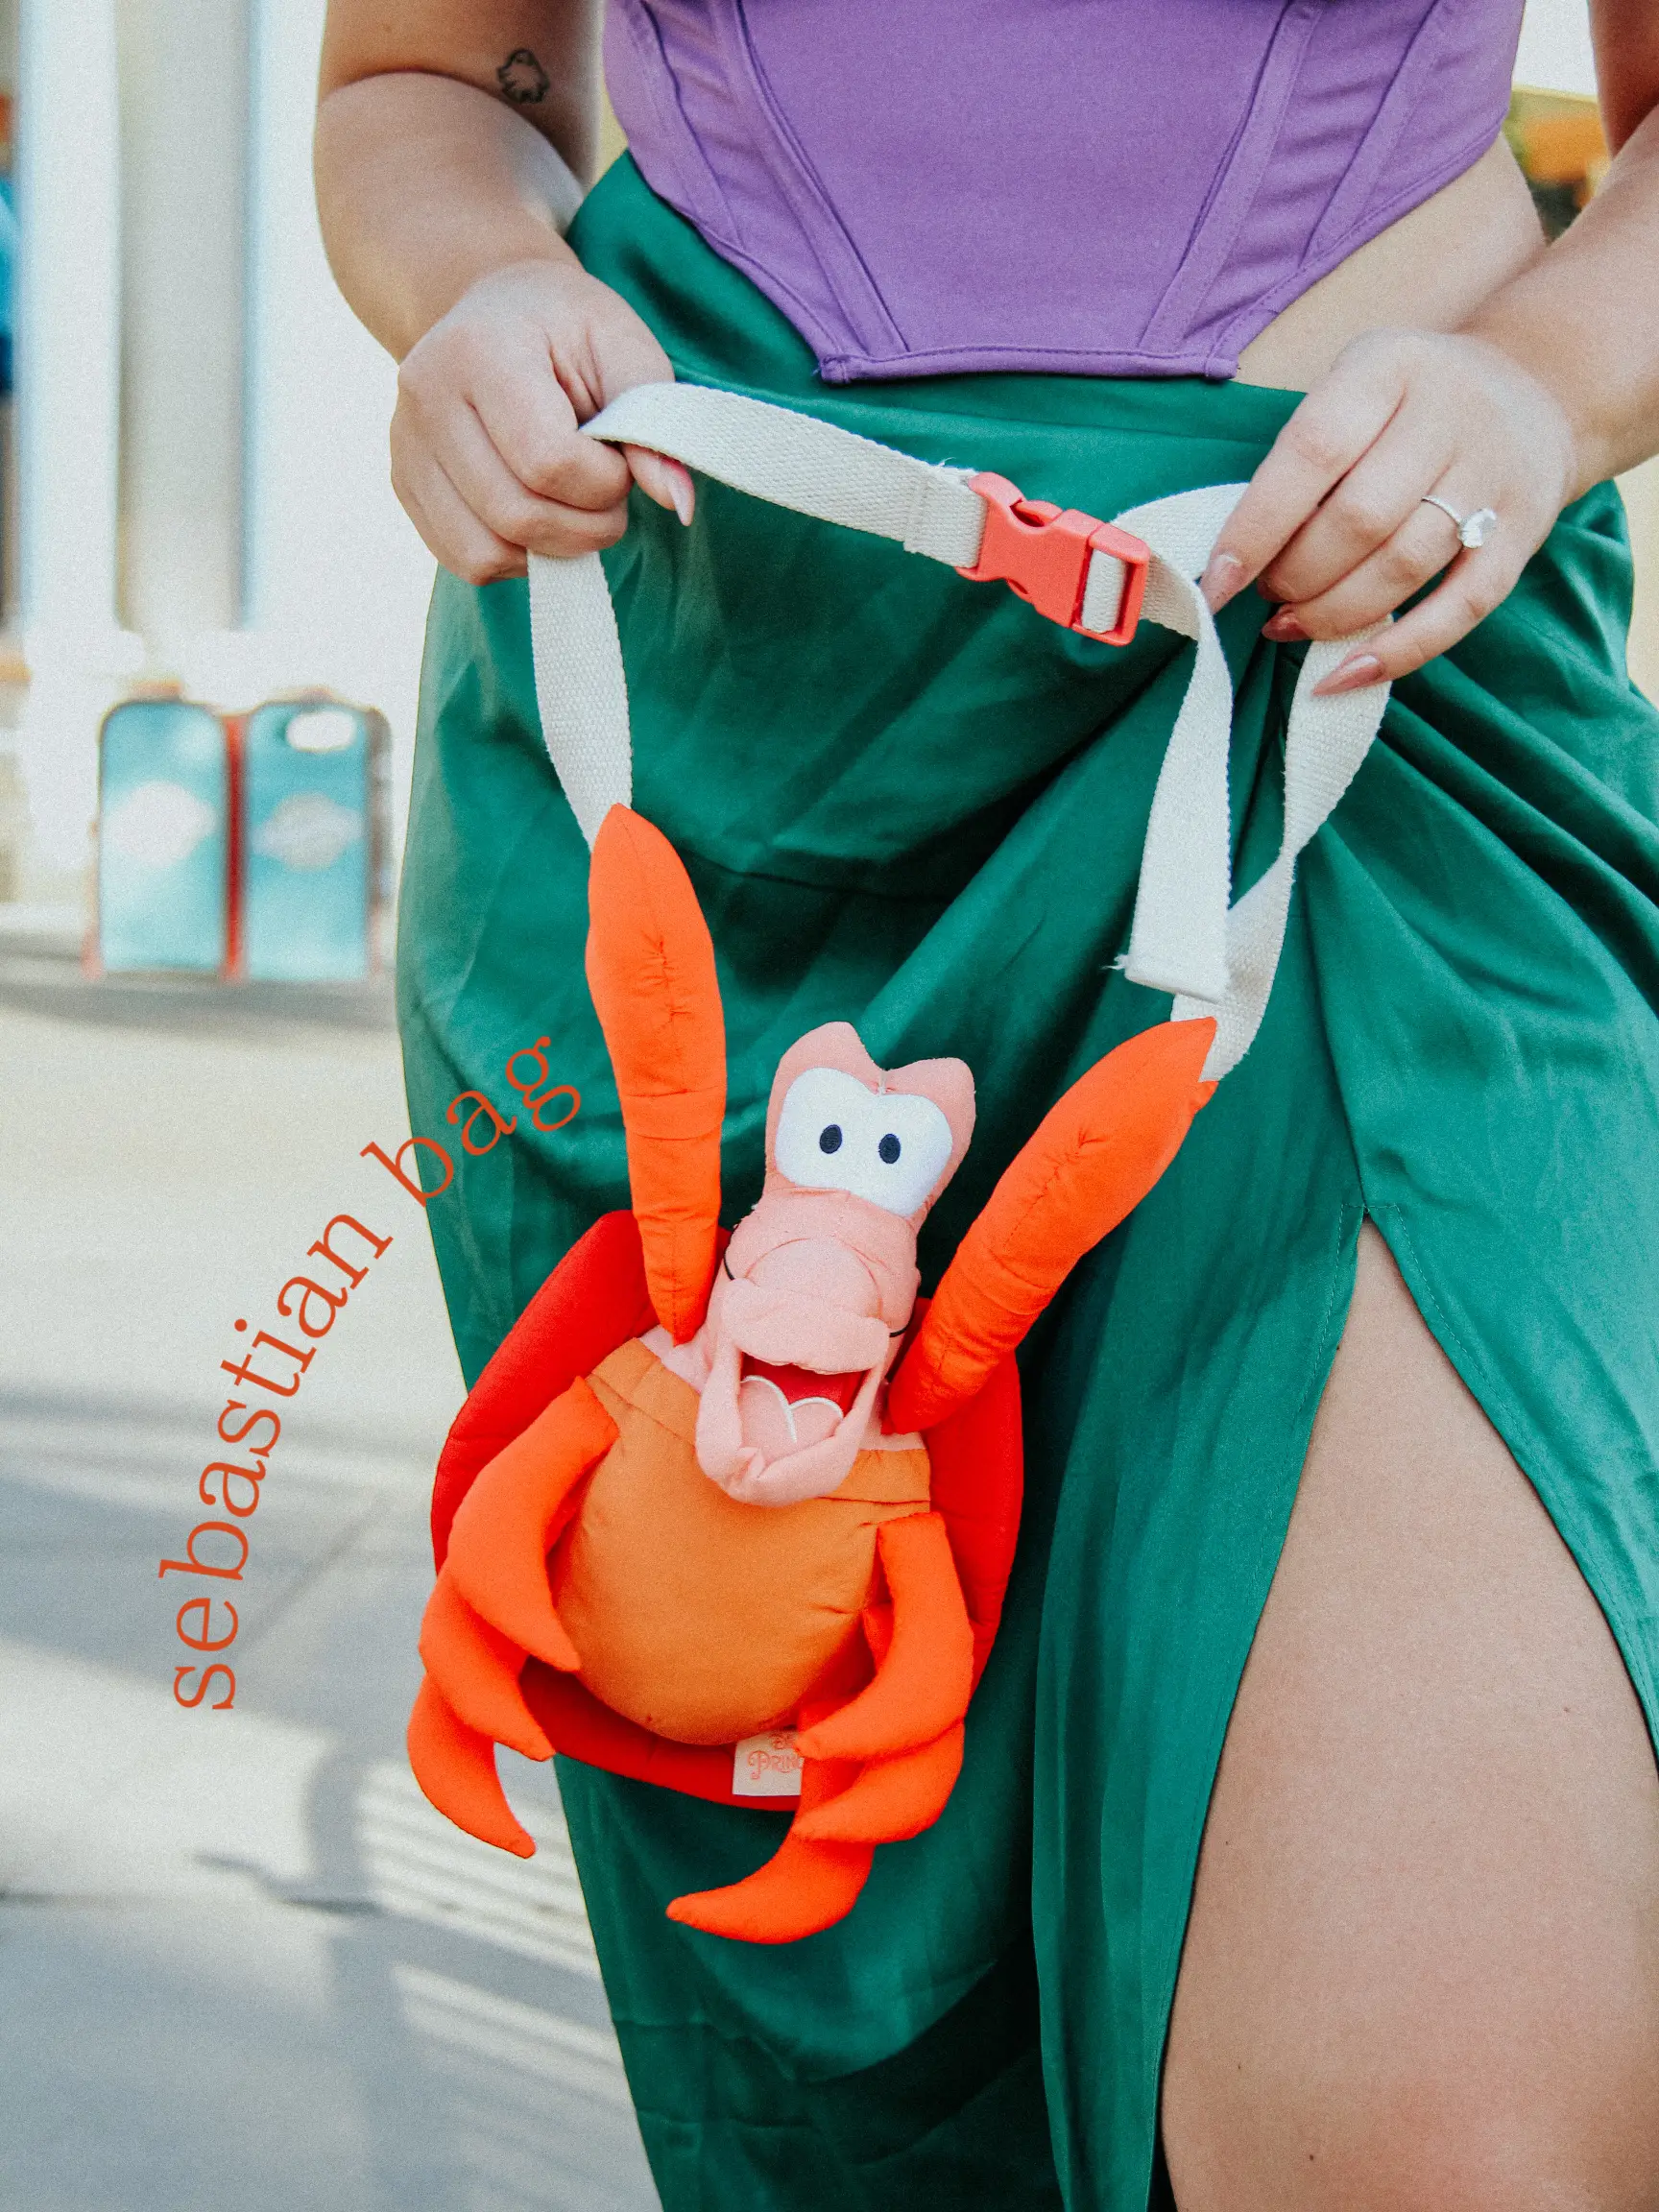 ARIEL Disney Princess Costume - Hipster - Shell Bra Shirt DIY 